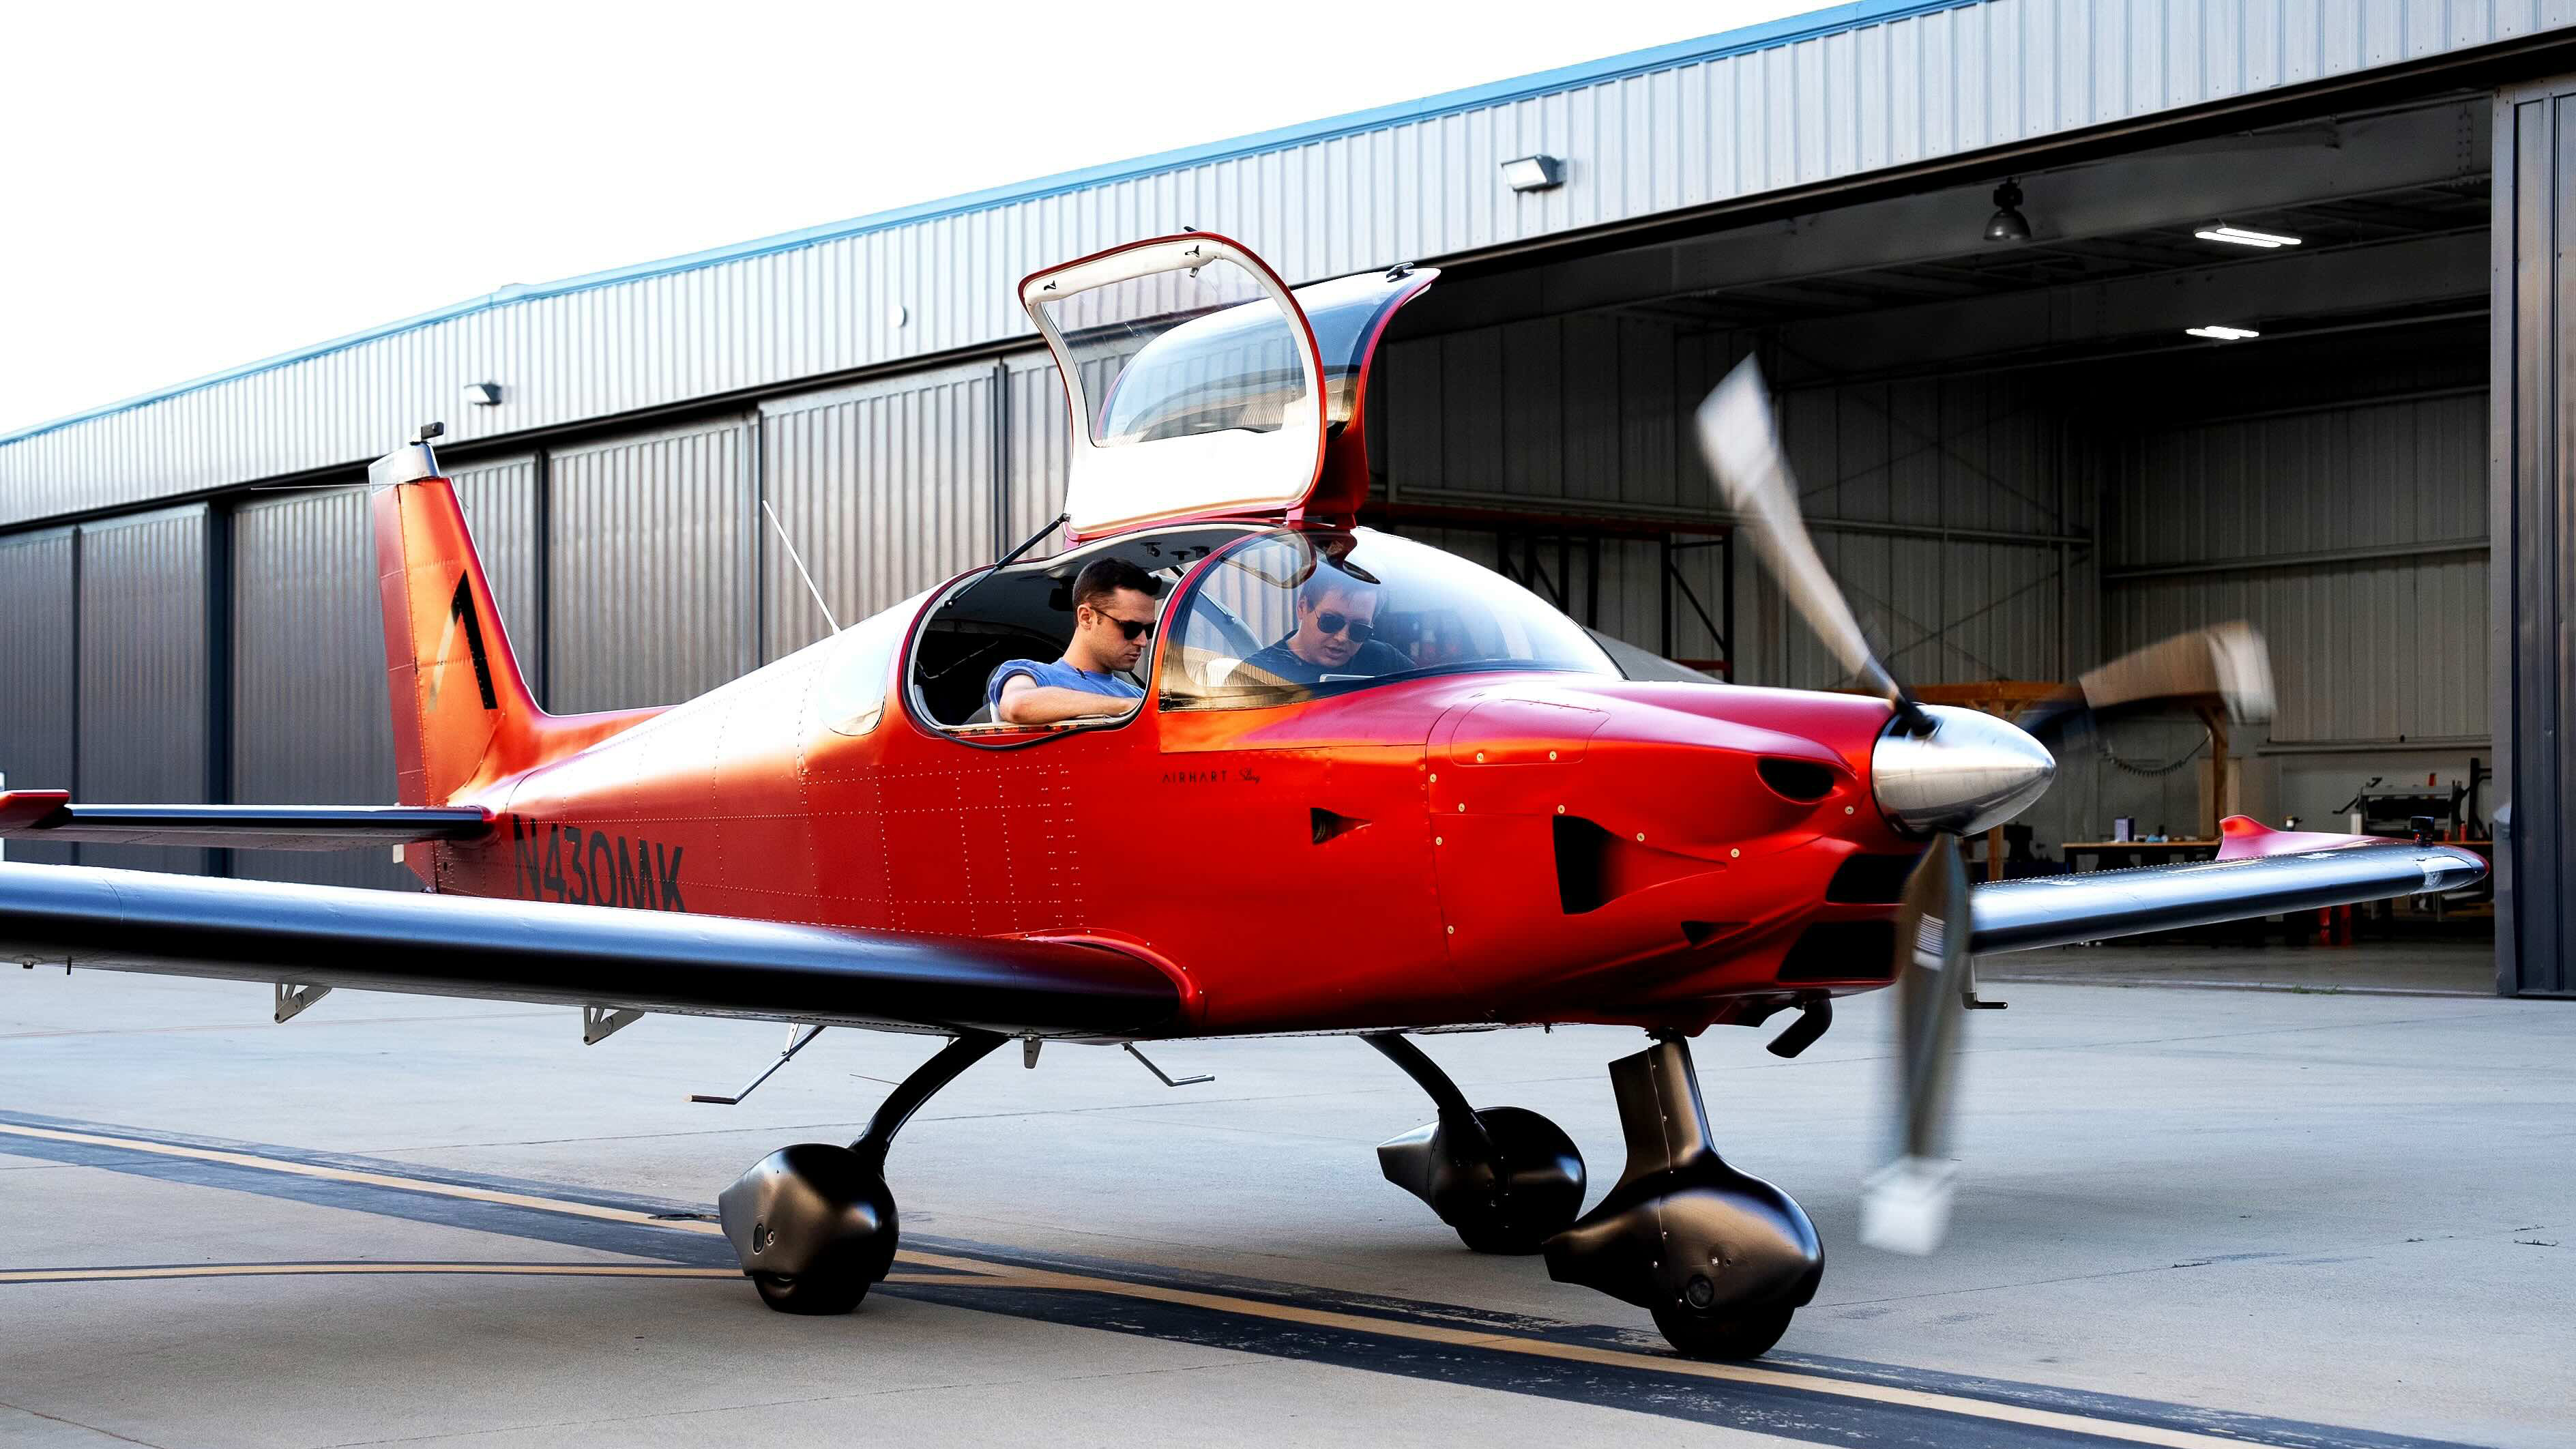 Airhart Sling prototype. Photo courtesy of Airhart Aeronautics.